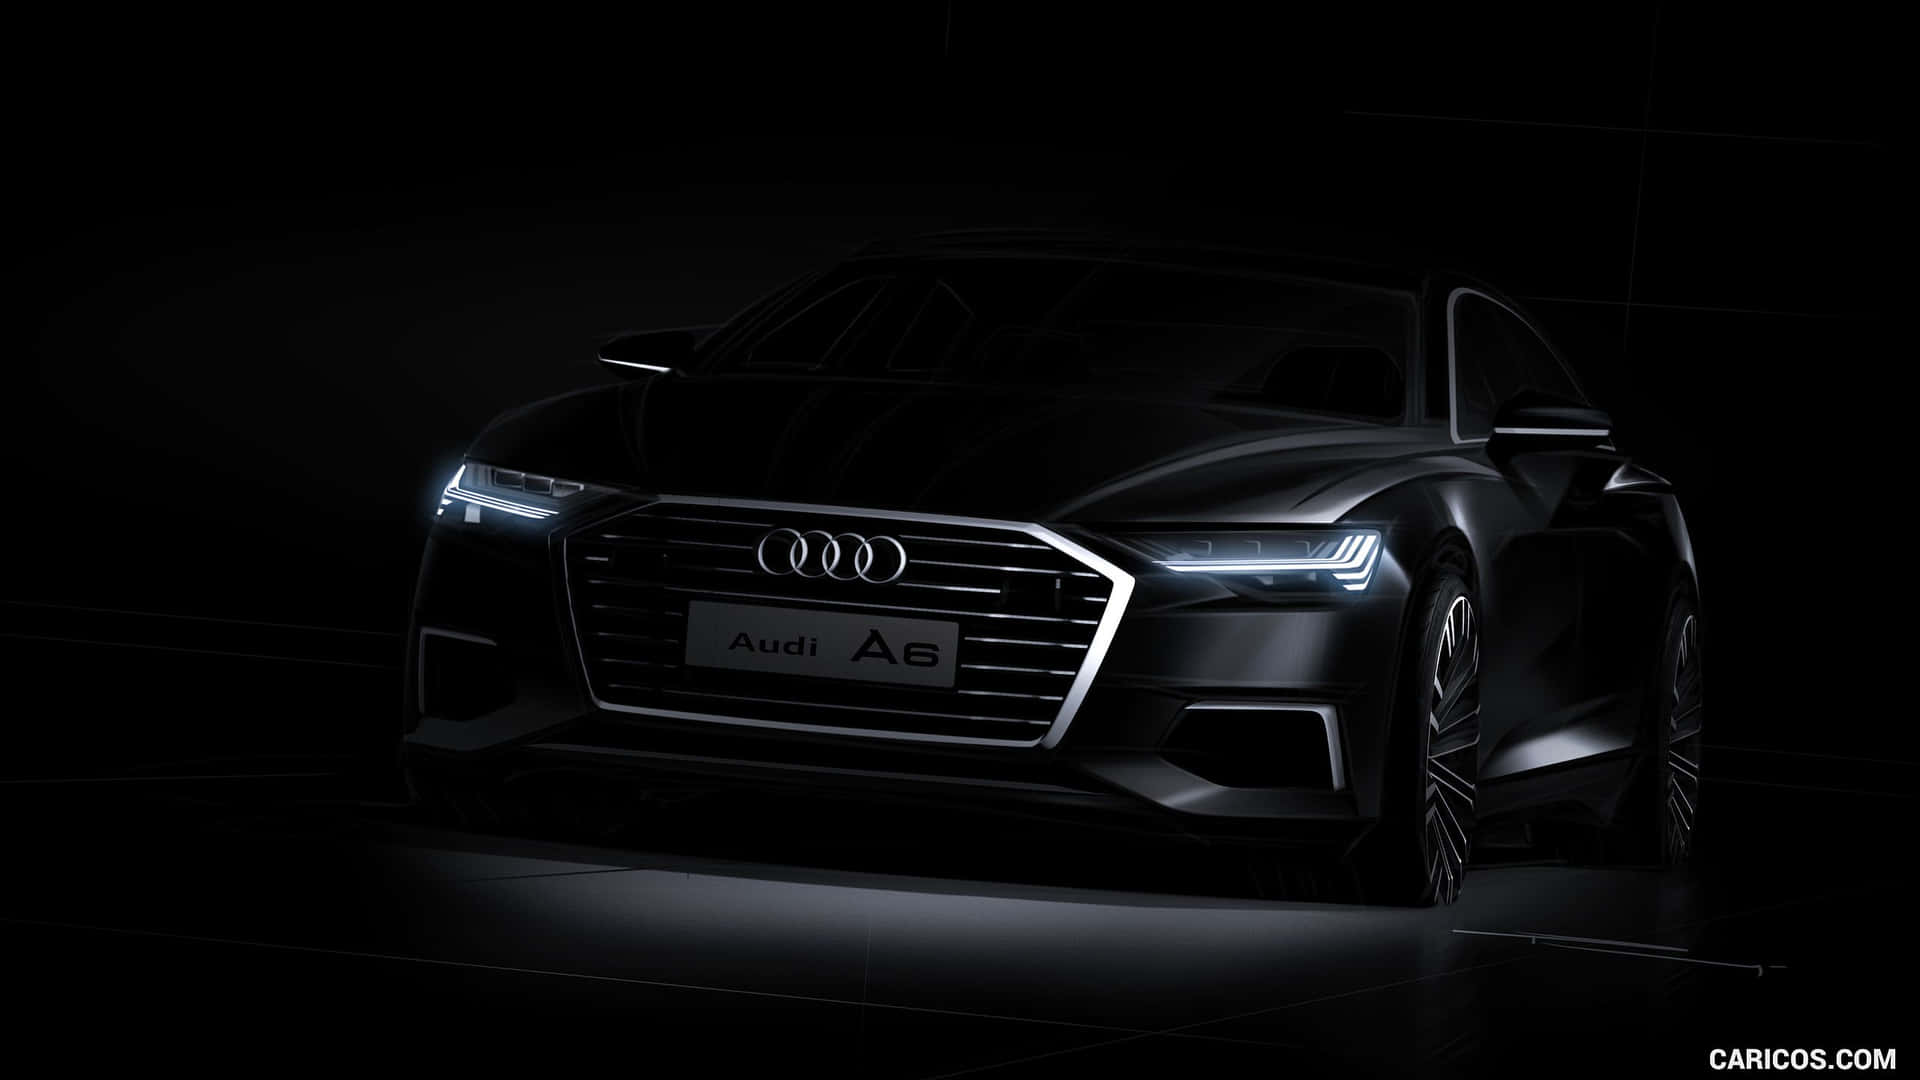 Caption: Stunning Audi S6 In Dynamic Setting Wallpaper